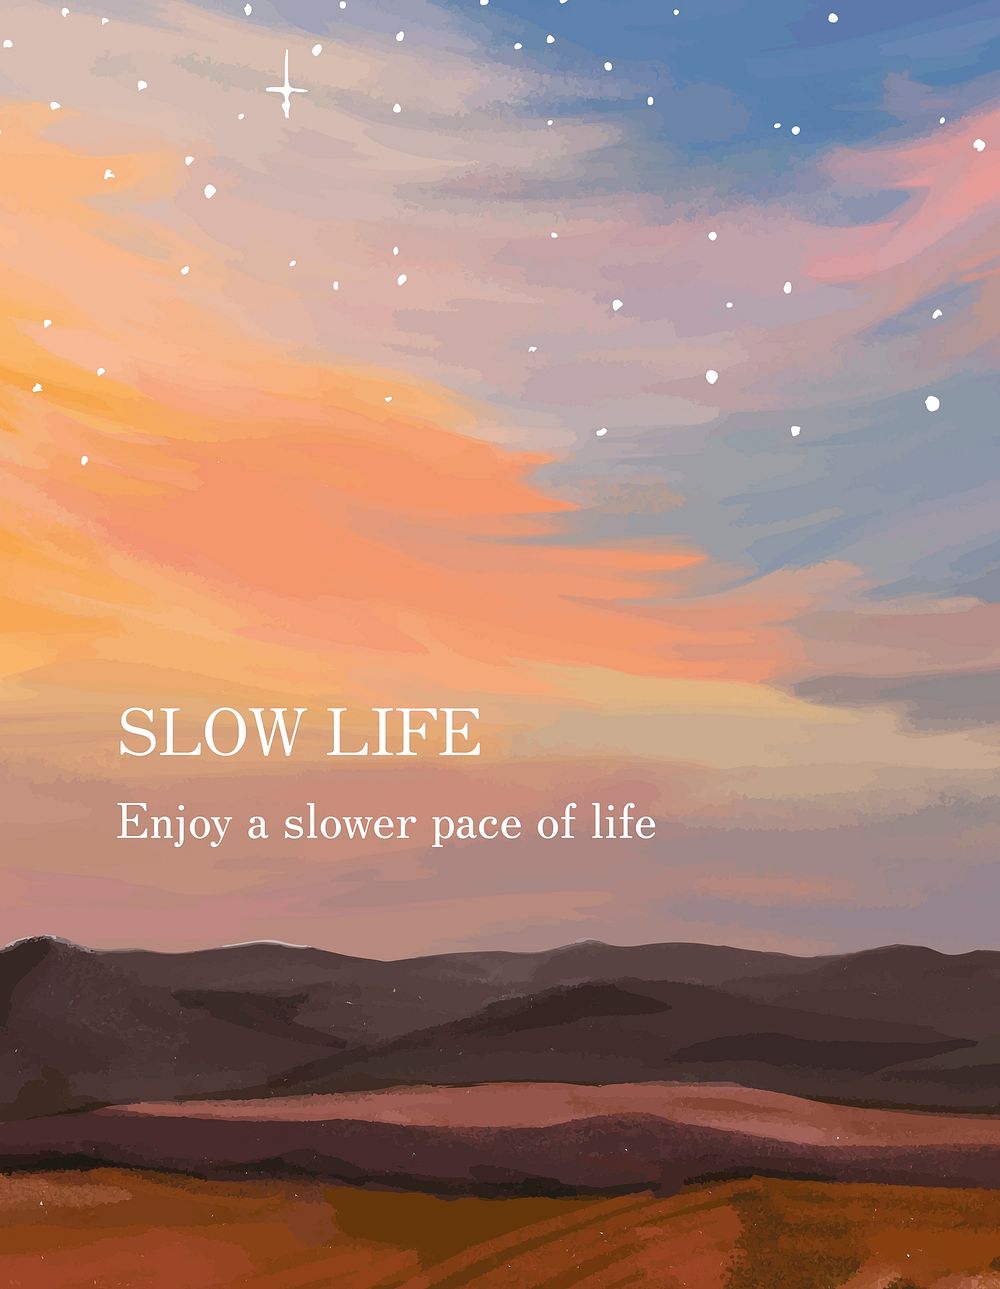 Slow lifestyle flyer template, editable text vector